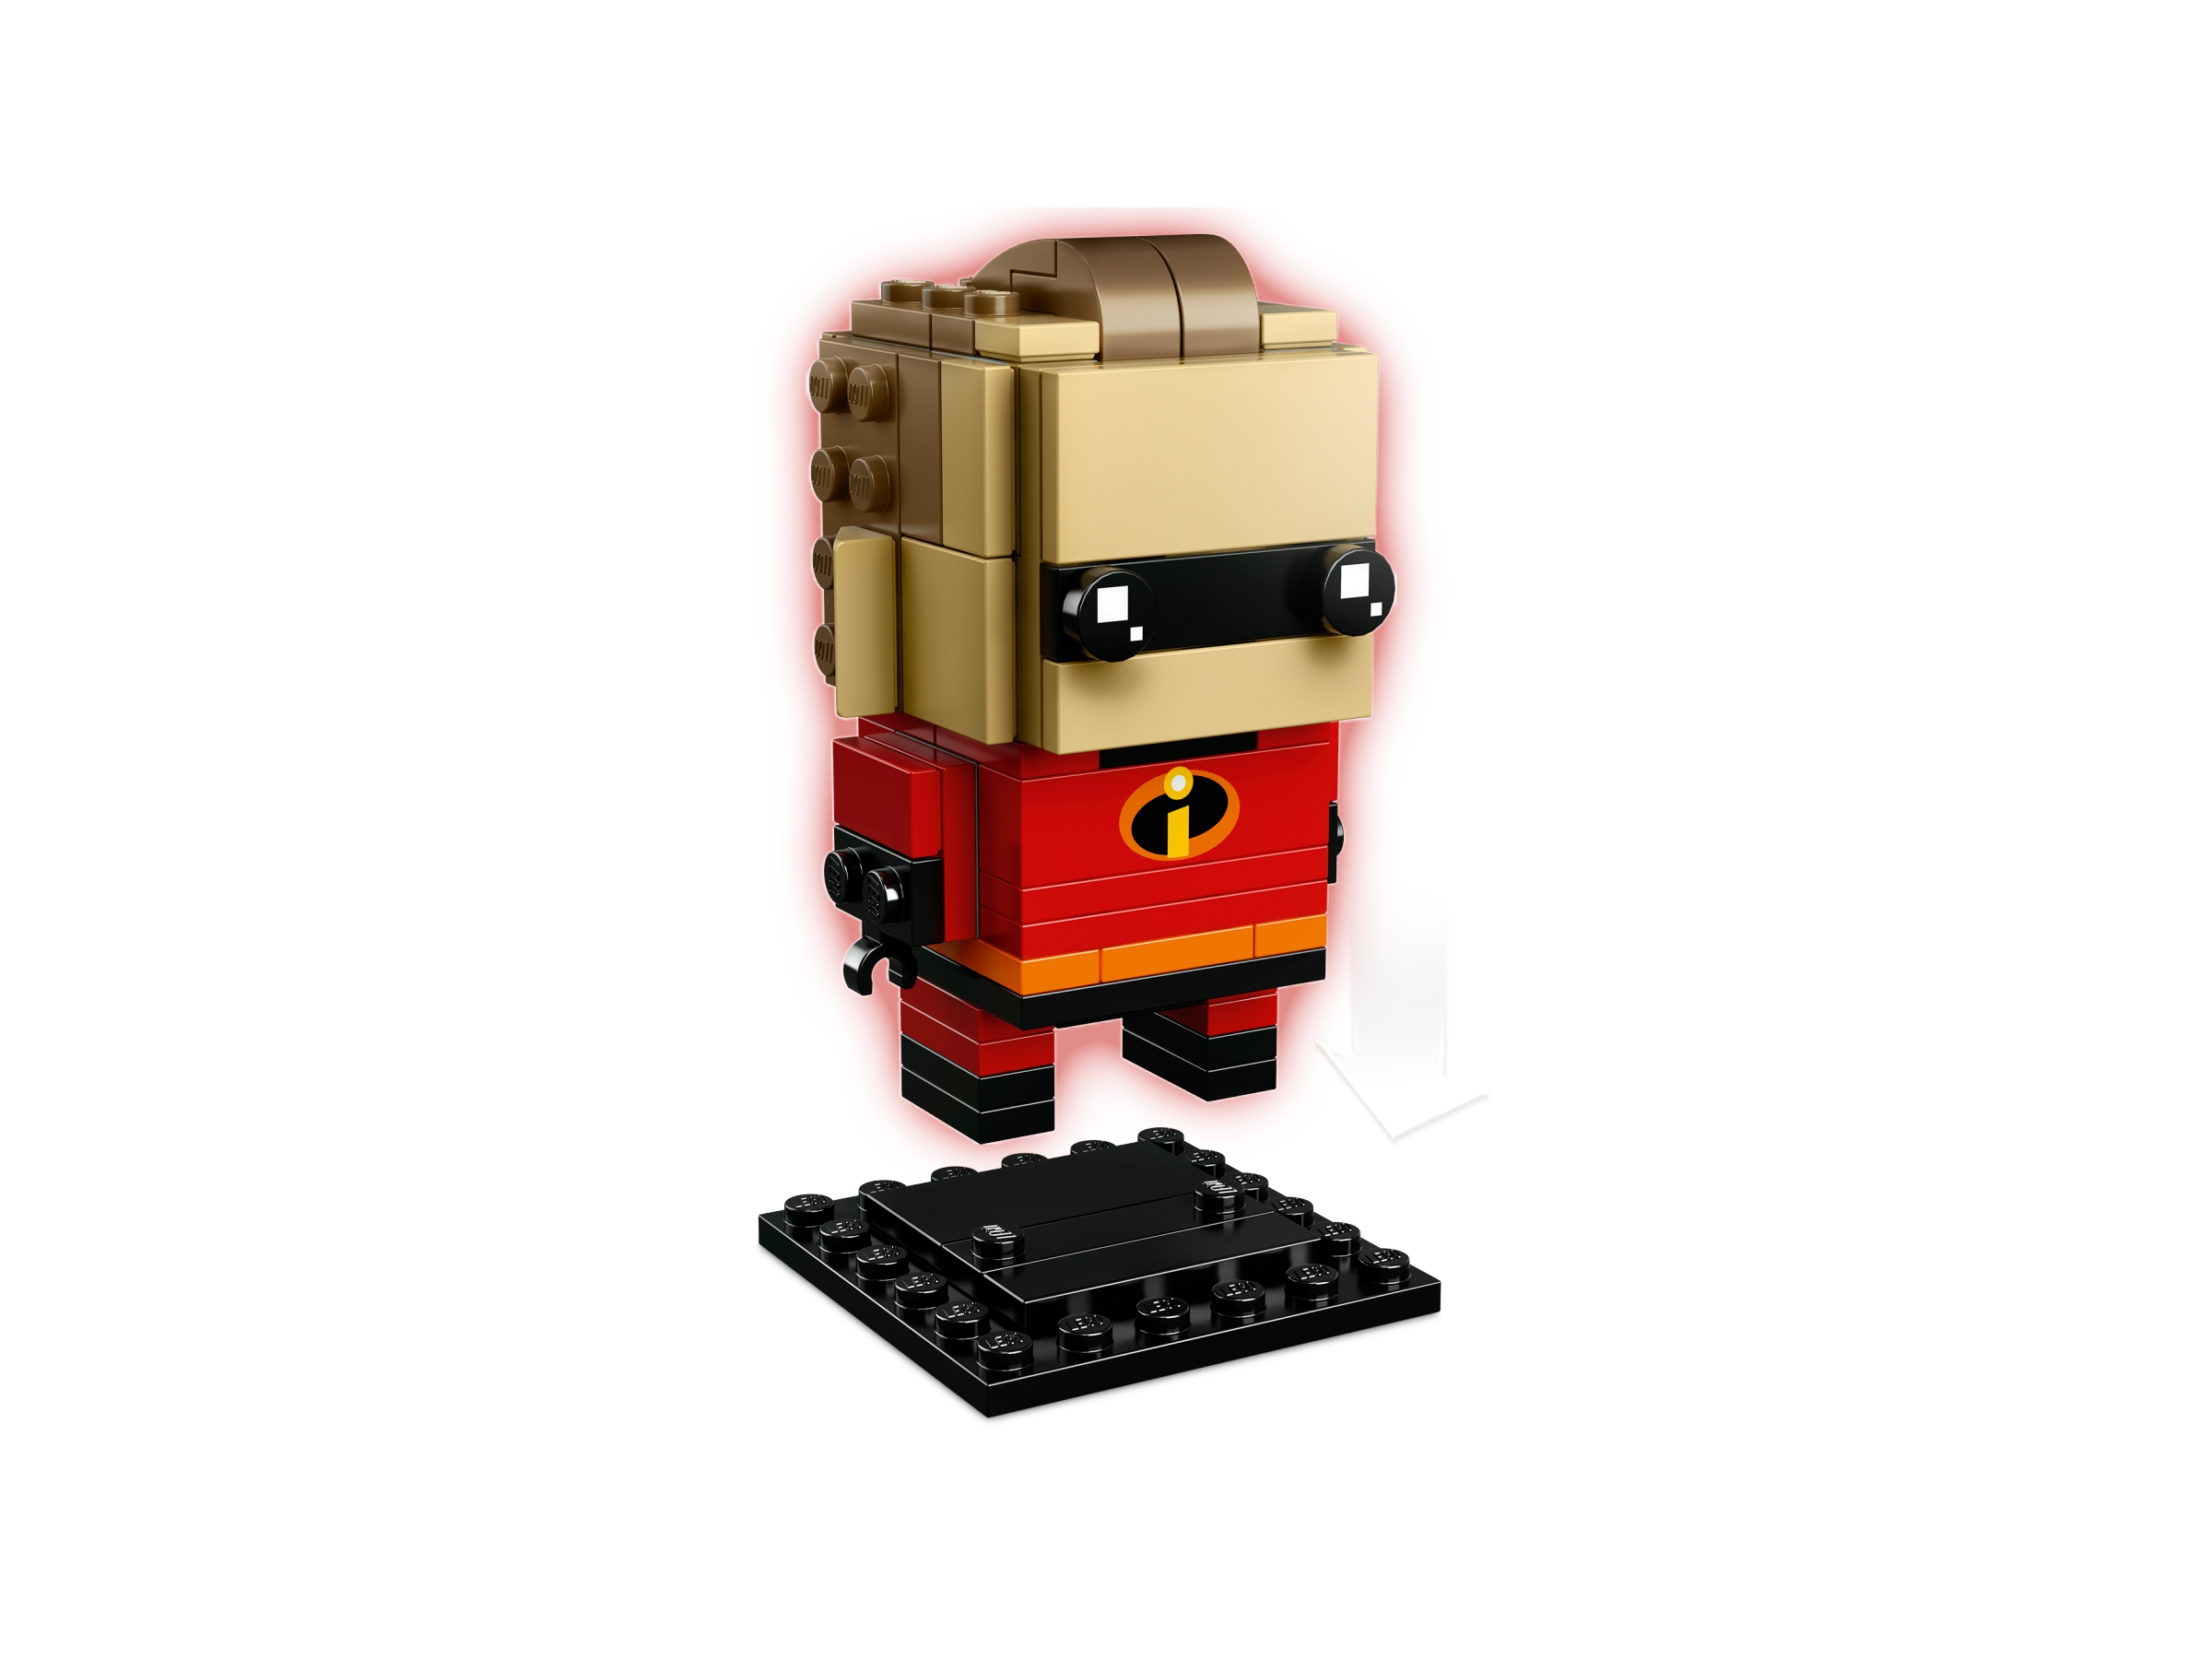 lego brickheadz mr incredible